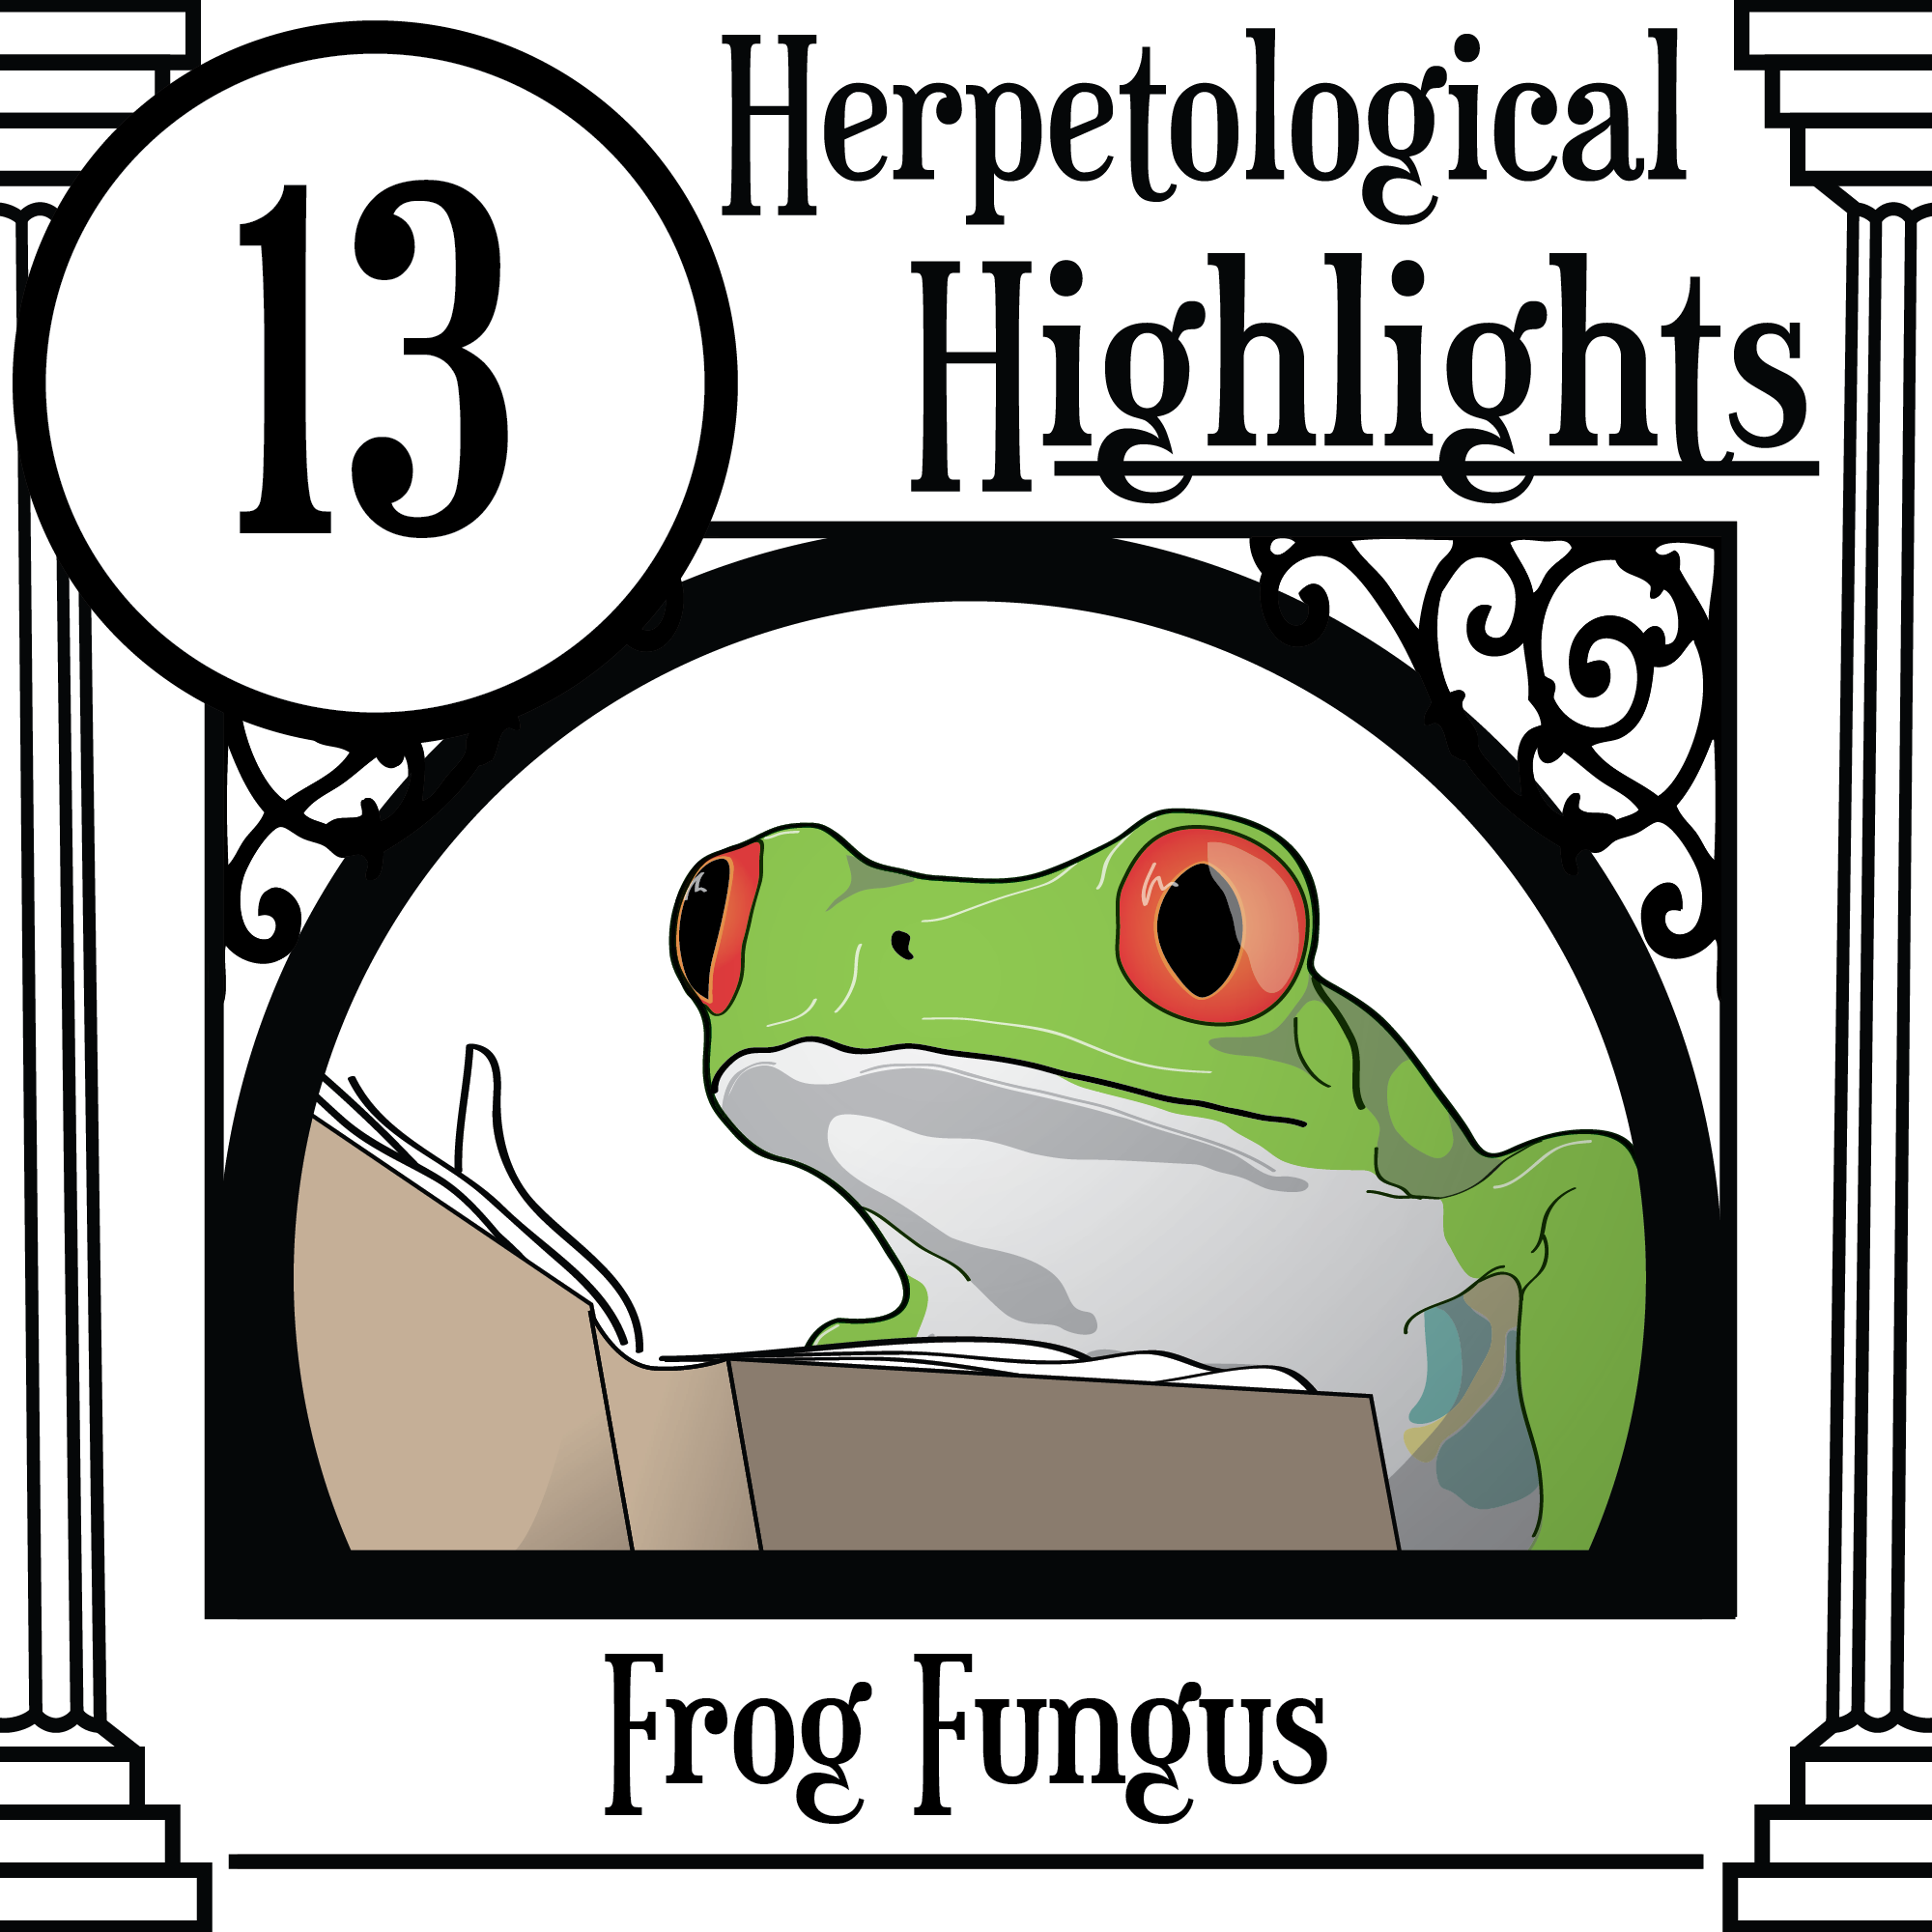 013 Frog Fungus